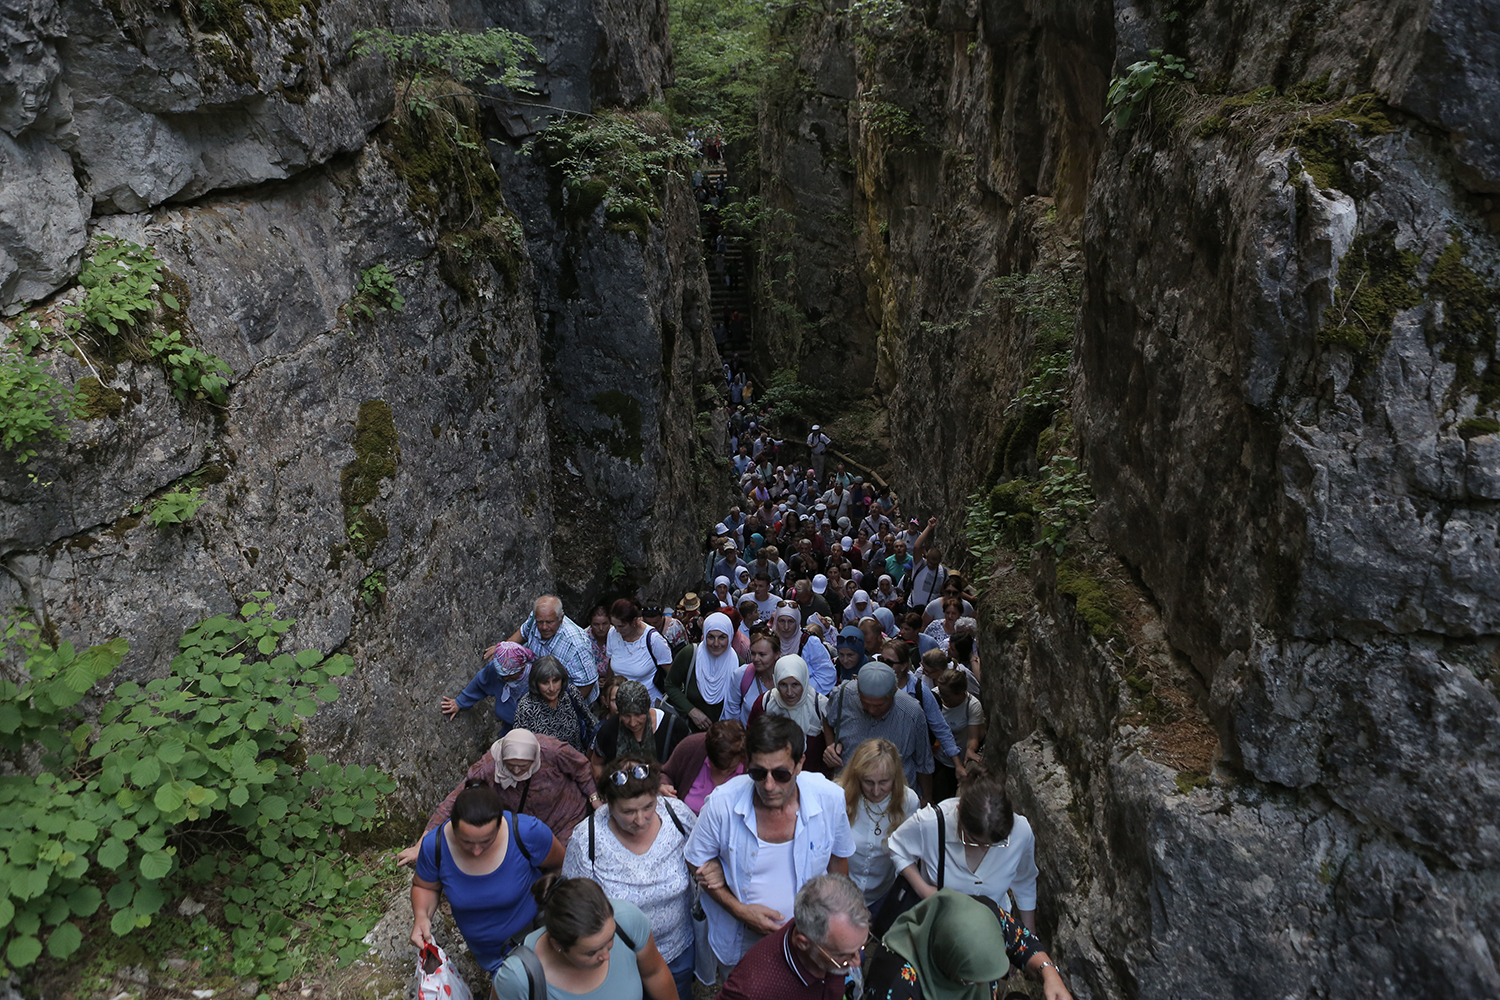 Pilgrims make their way through the rocky chasm (photo: Konstantin Novakovic)